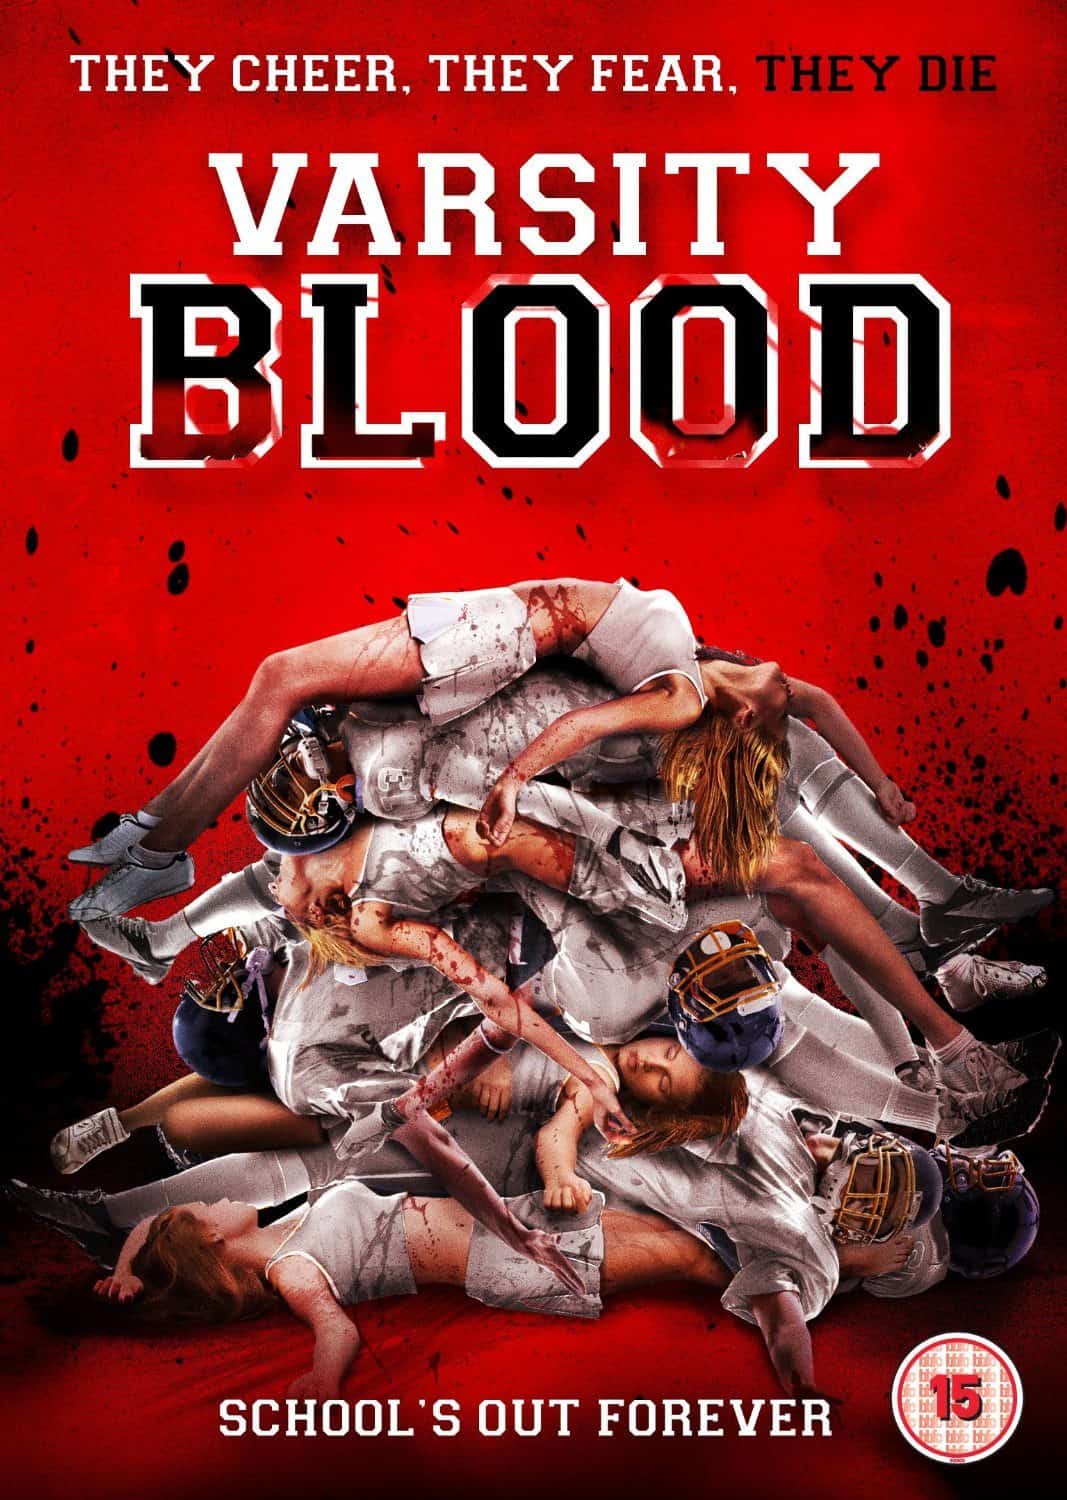 Horror Movie Review: Varsity Blood (2014)